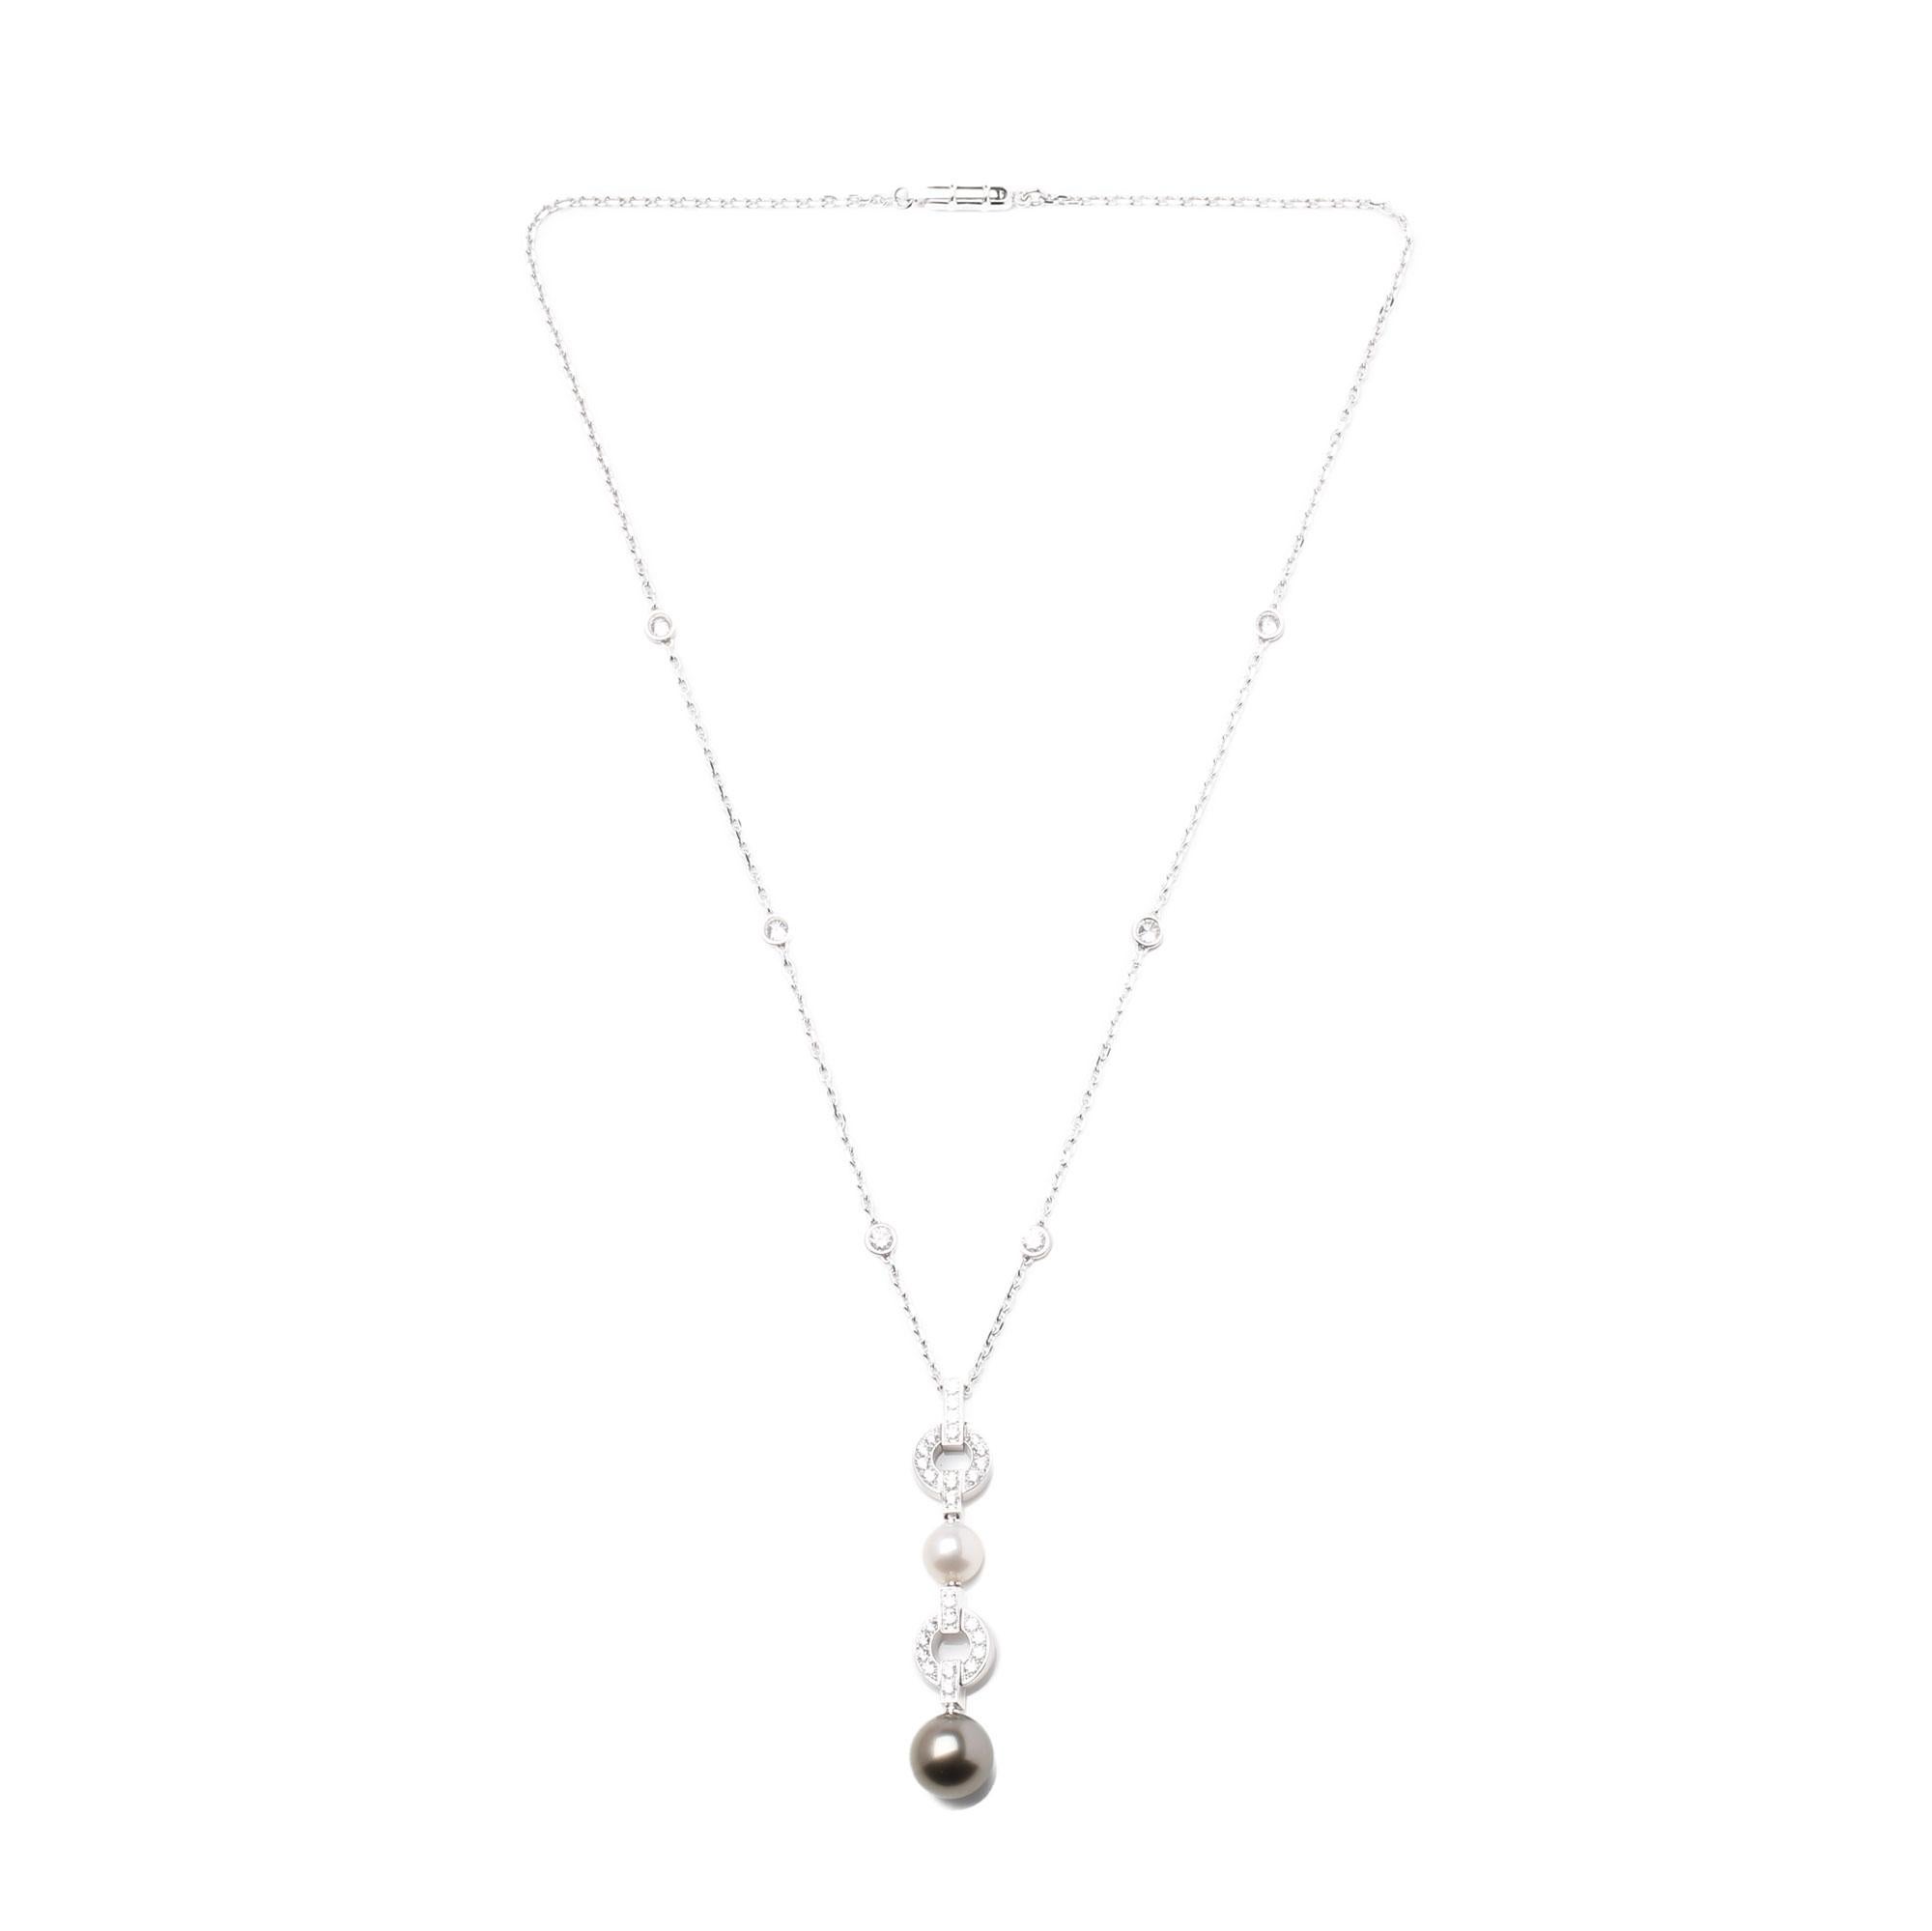 Contemporary Cartier Himalia Diamond and Pearl Necklace